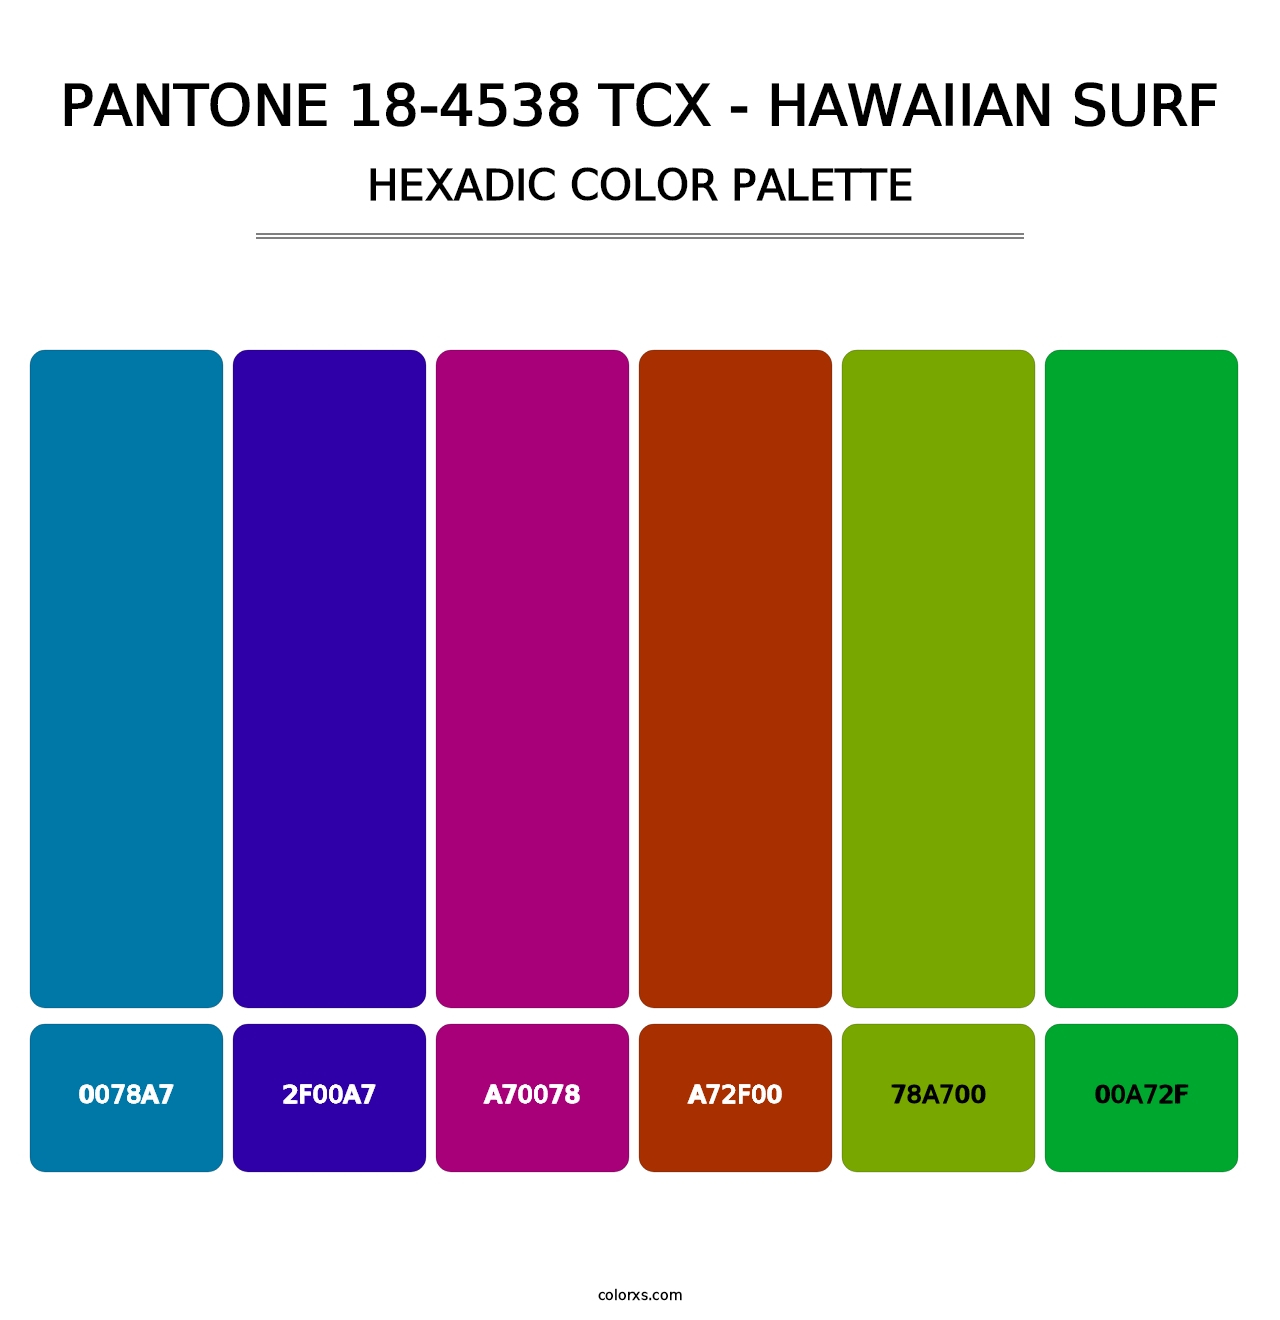 PANTONE 18-4538 TCX - Hawaiian Surf - Hexadic Color Palette